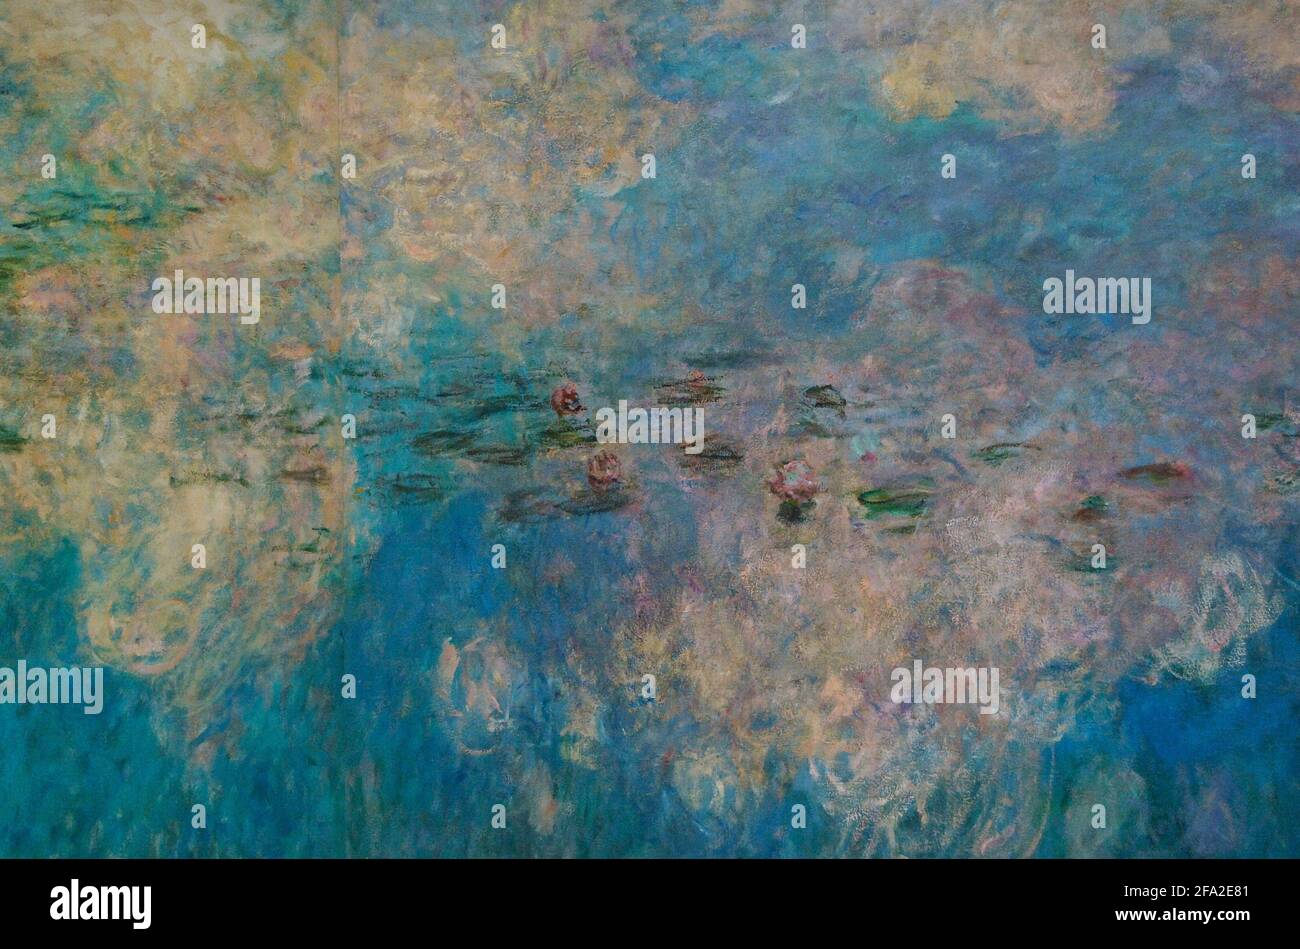 Claude Monet (1840-1926). French impressionist painter. Water Lilies: The Clouds, ca. 1915-1926. Oil on canvas (200 x 1275 cm). Detail. Orangerie Museum. Paris. France. Stock Photo